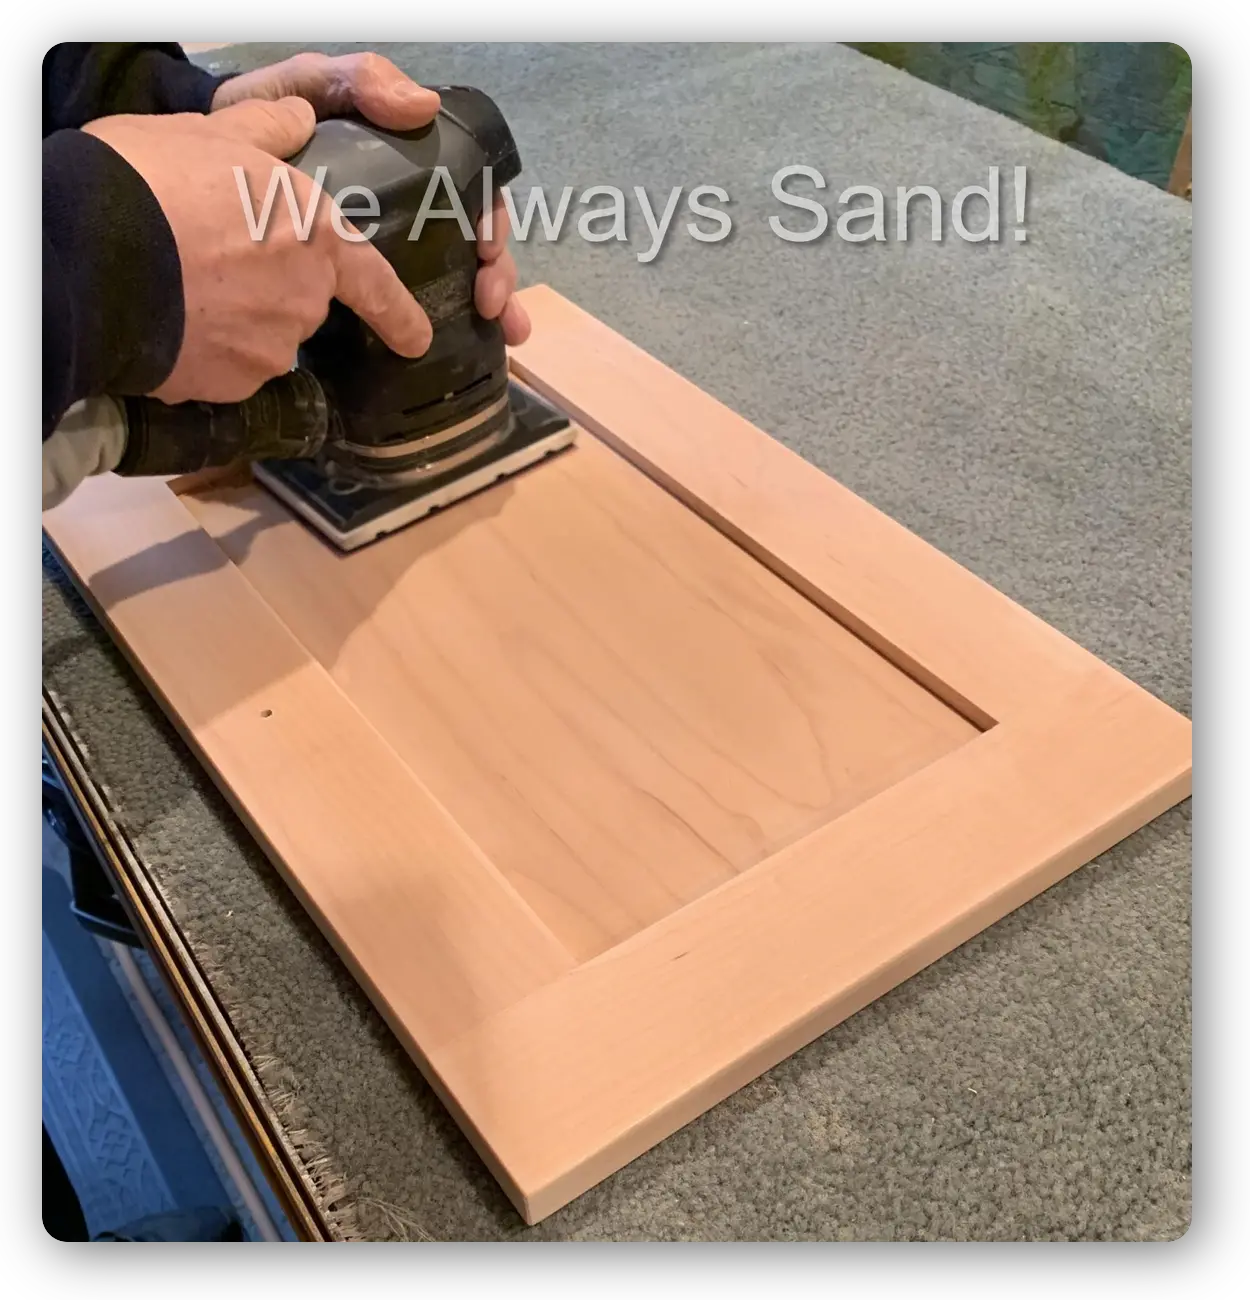 We Always Sand!